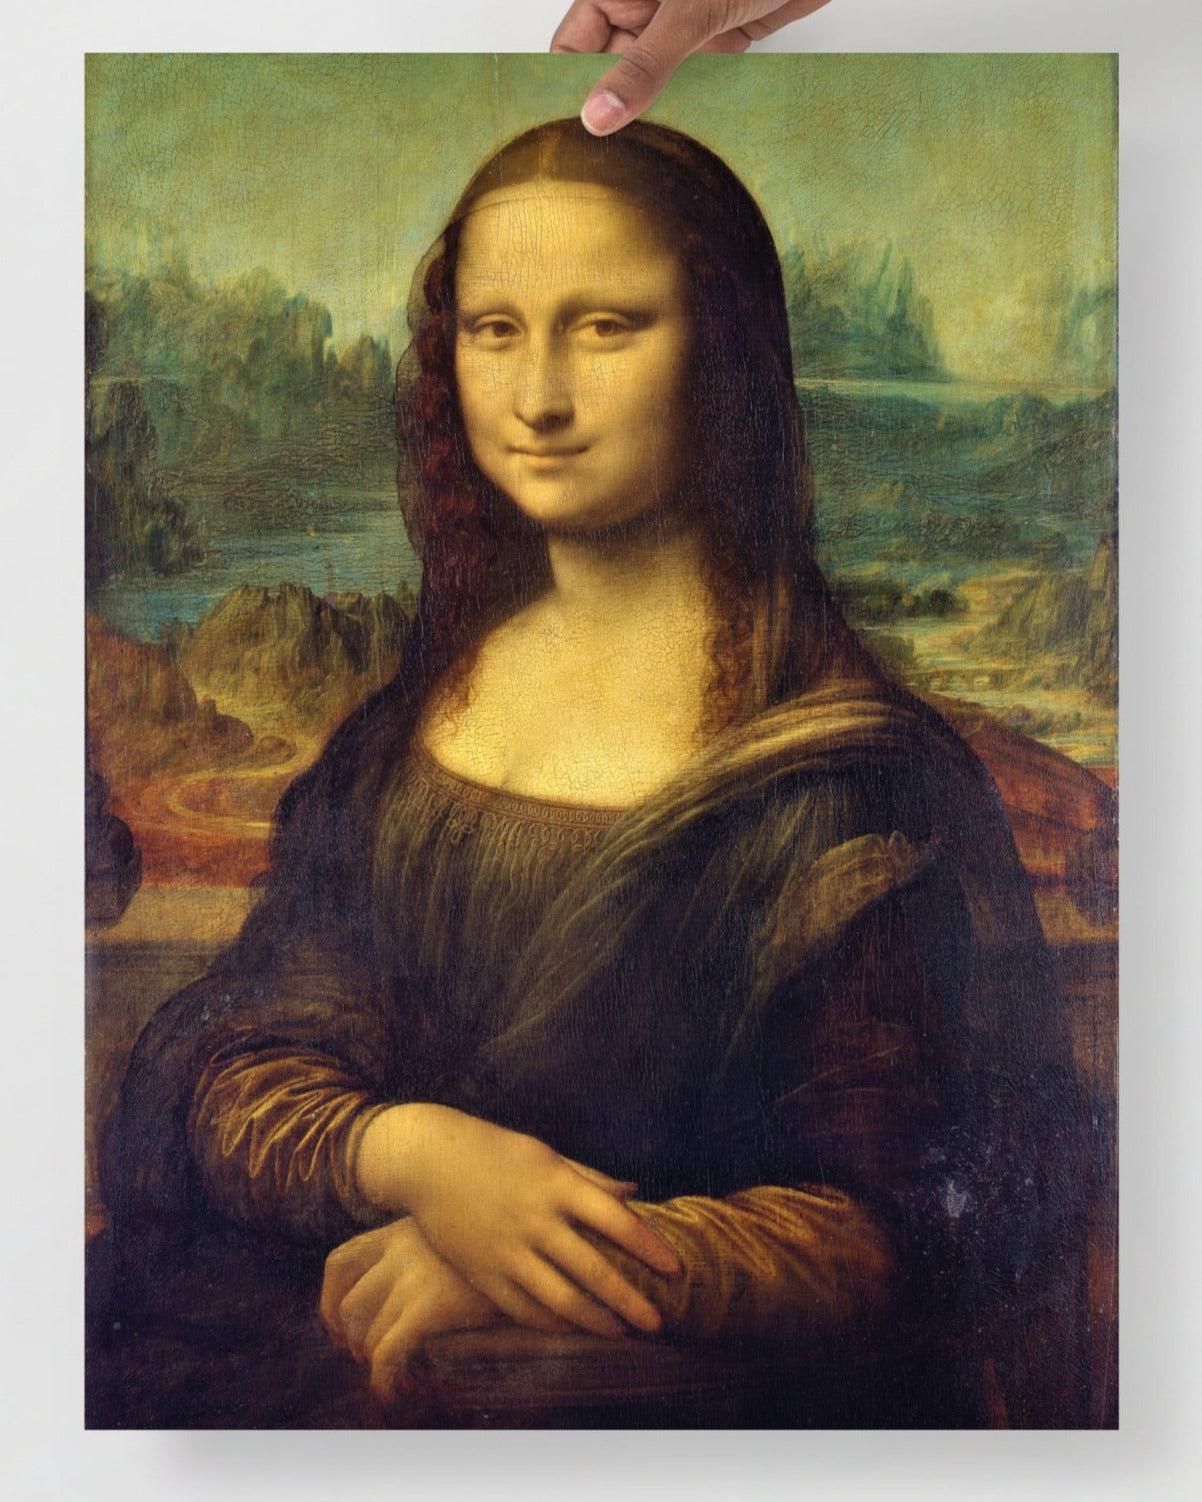 A Mona Lisa by Leonardo Da Vinci poster on a plain backdrop in size 18x24”.